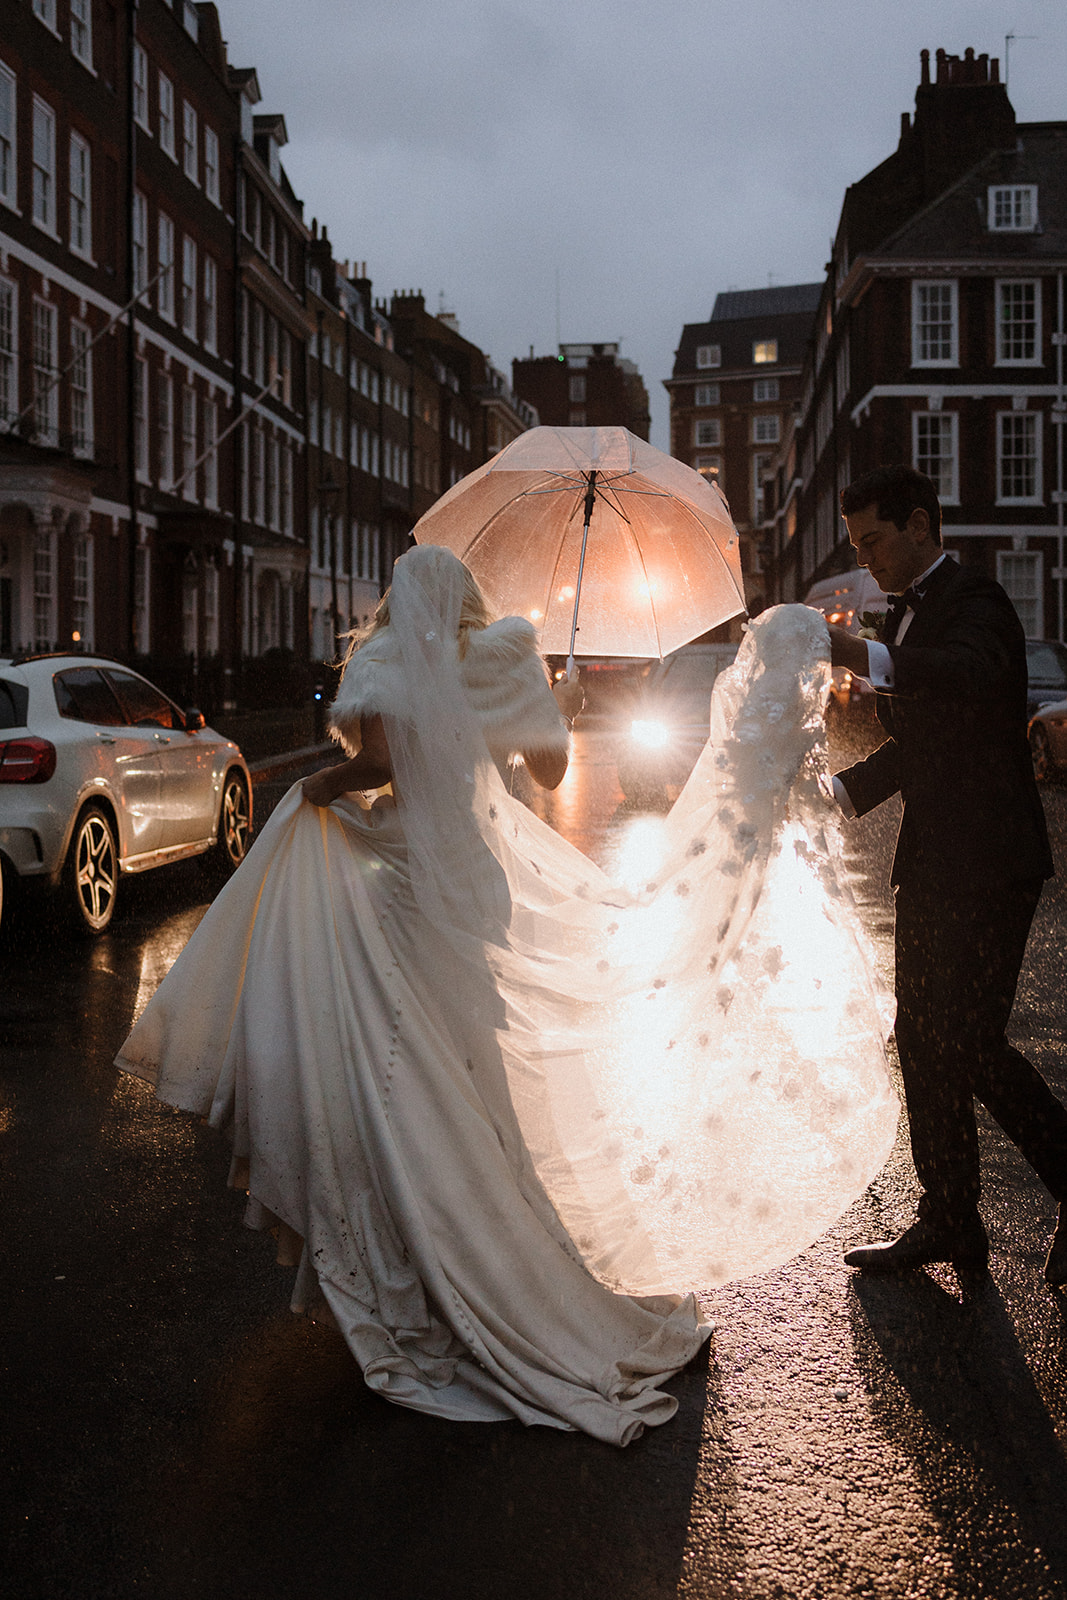 London wedding in winter, black tie, street photography